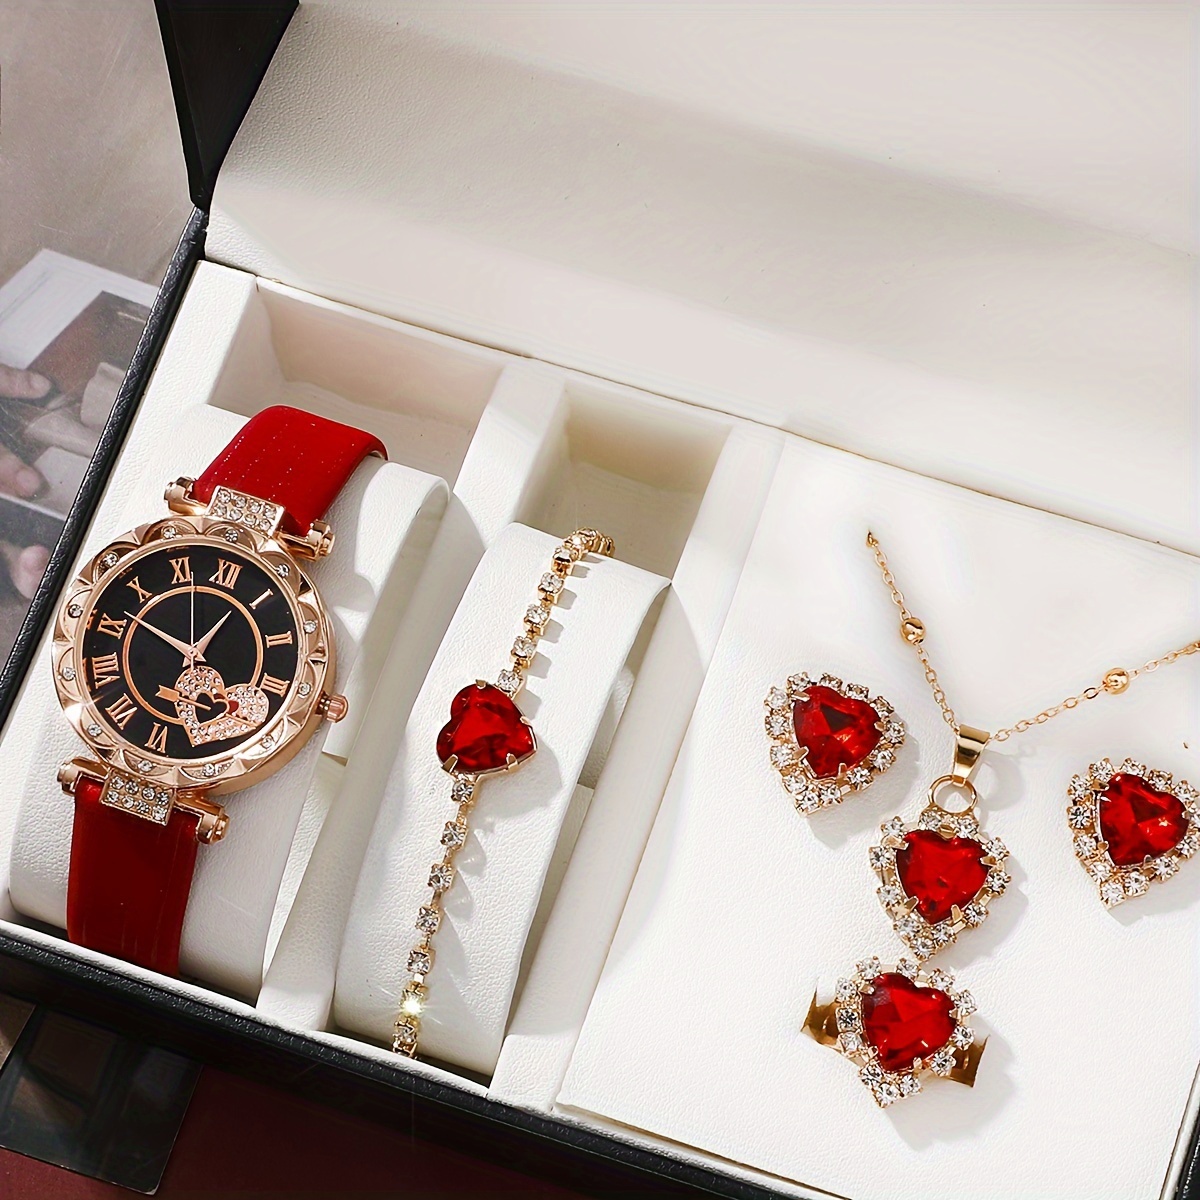 

6pcs/set Women's Romantic Heart Quartz Watch Luxury Rhinestone Analog Wrist Watch & Jewelry Set, Valentine's Day Gift For Her